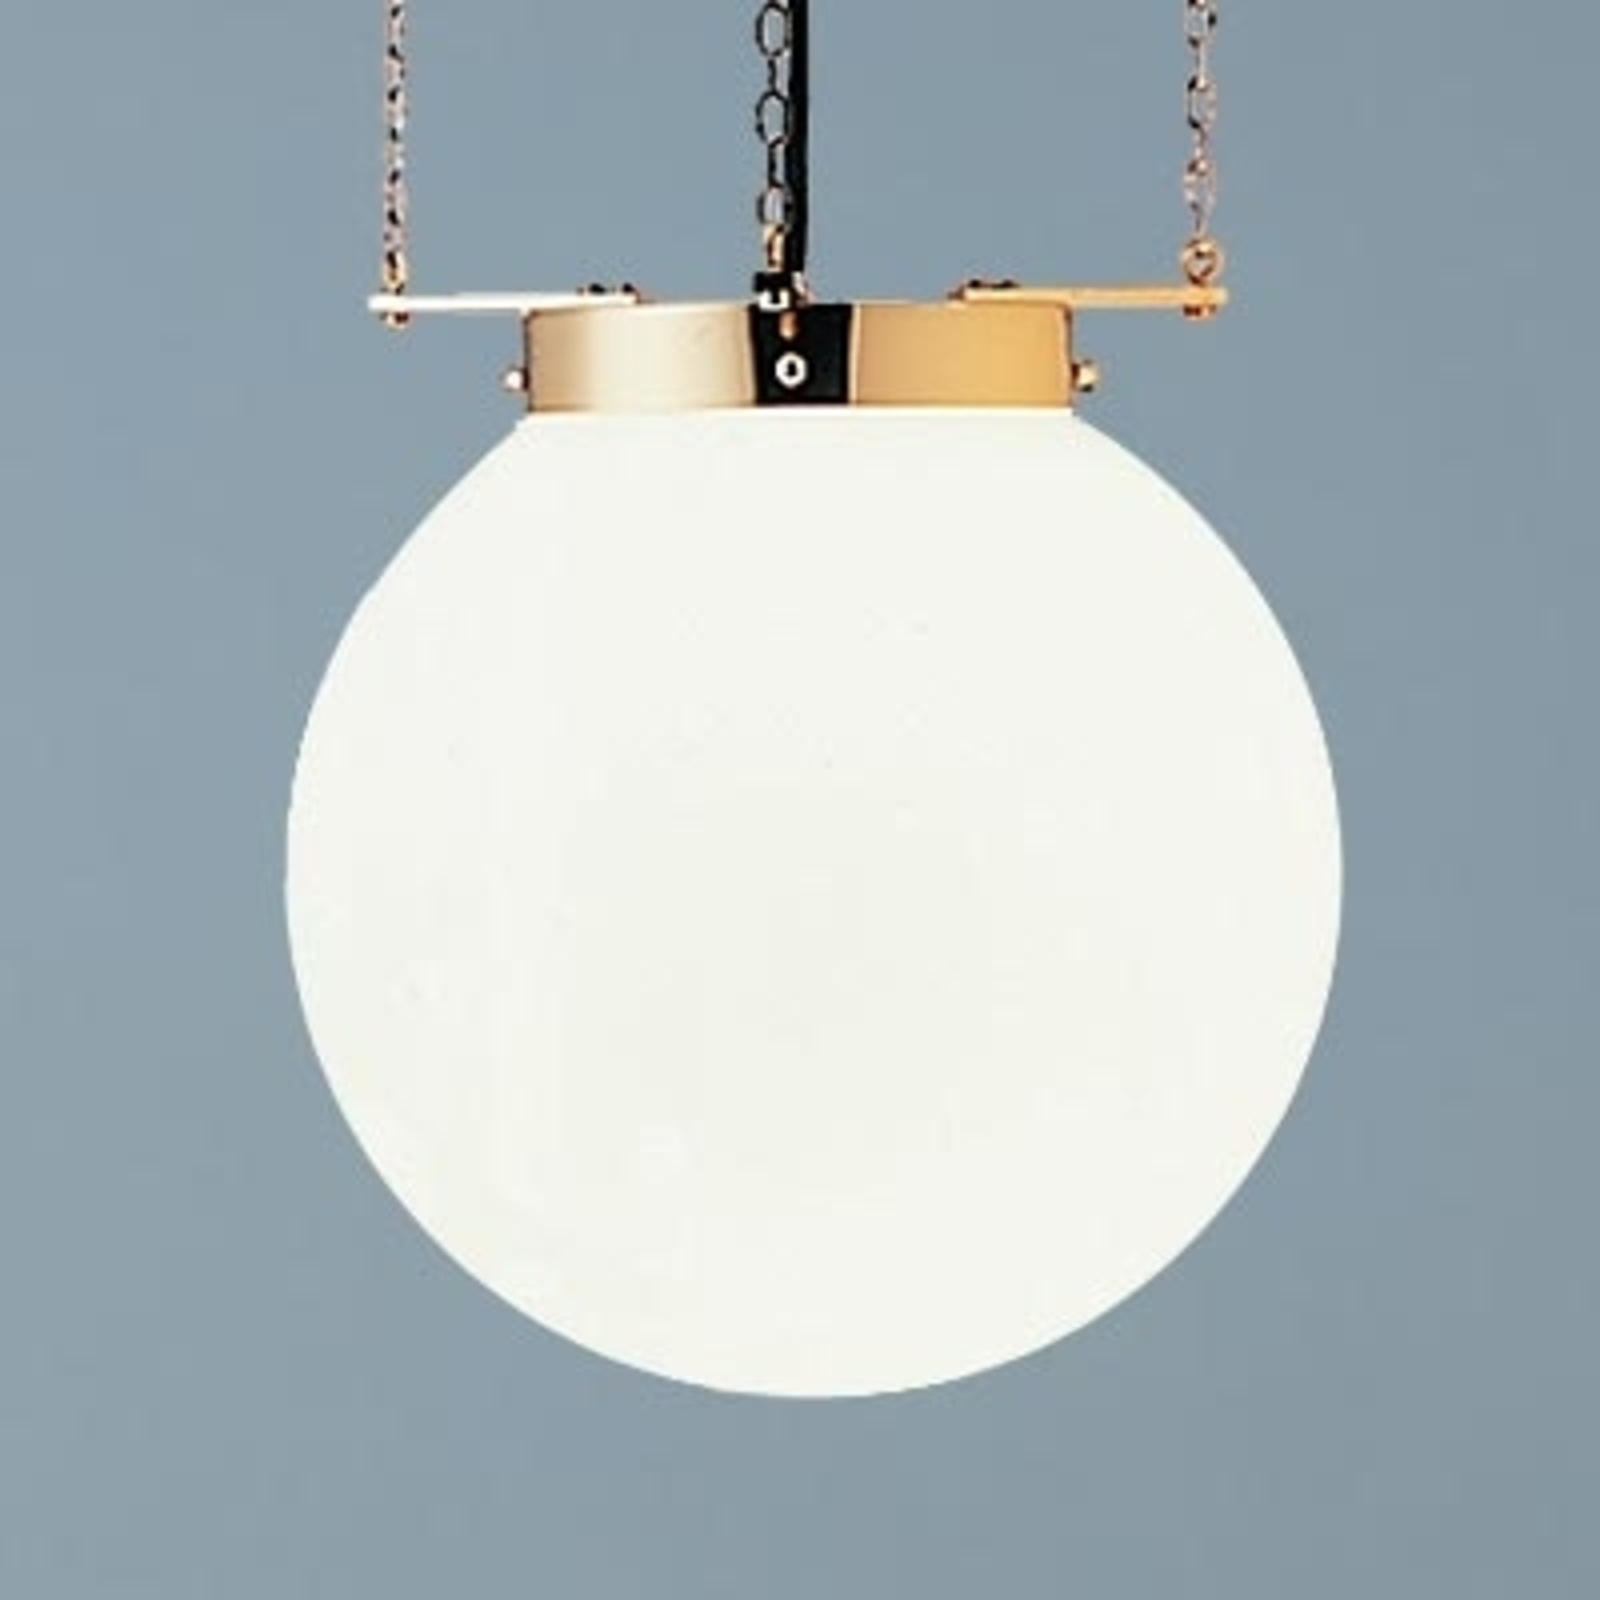 Lámpara colgante estilo Bauhaus latón 35 cm